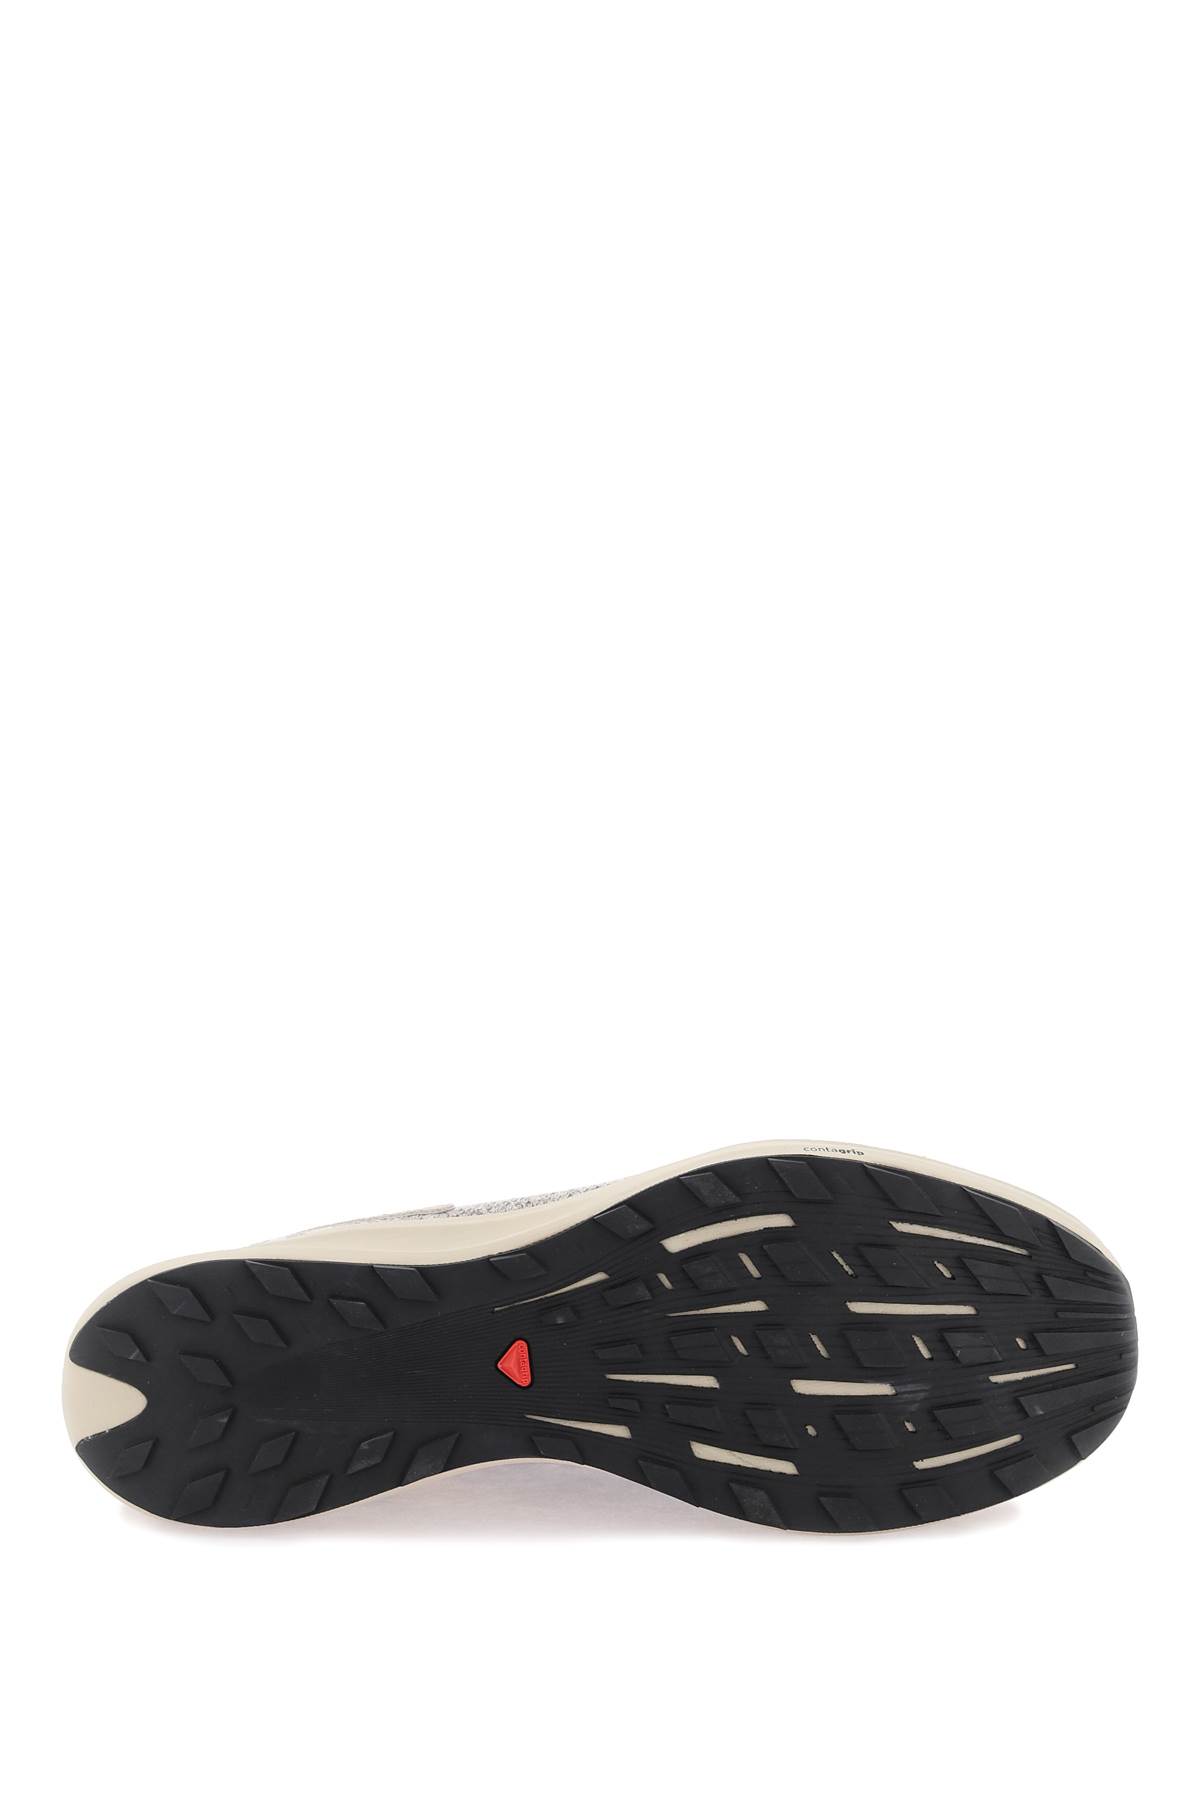 Shop Salomon Pulsar Prg Sneakers In Plum Kitten Feather Gray Black (beige)